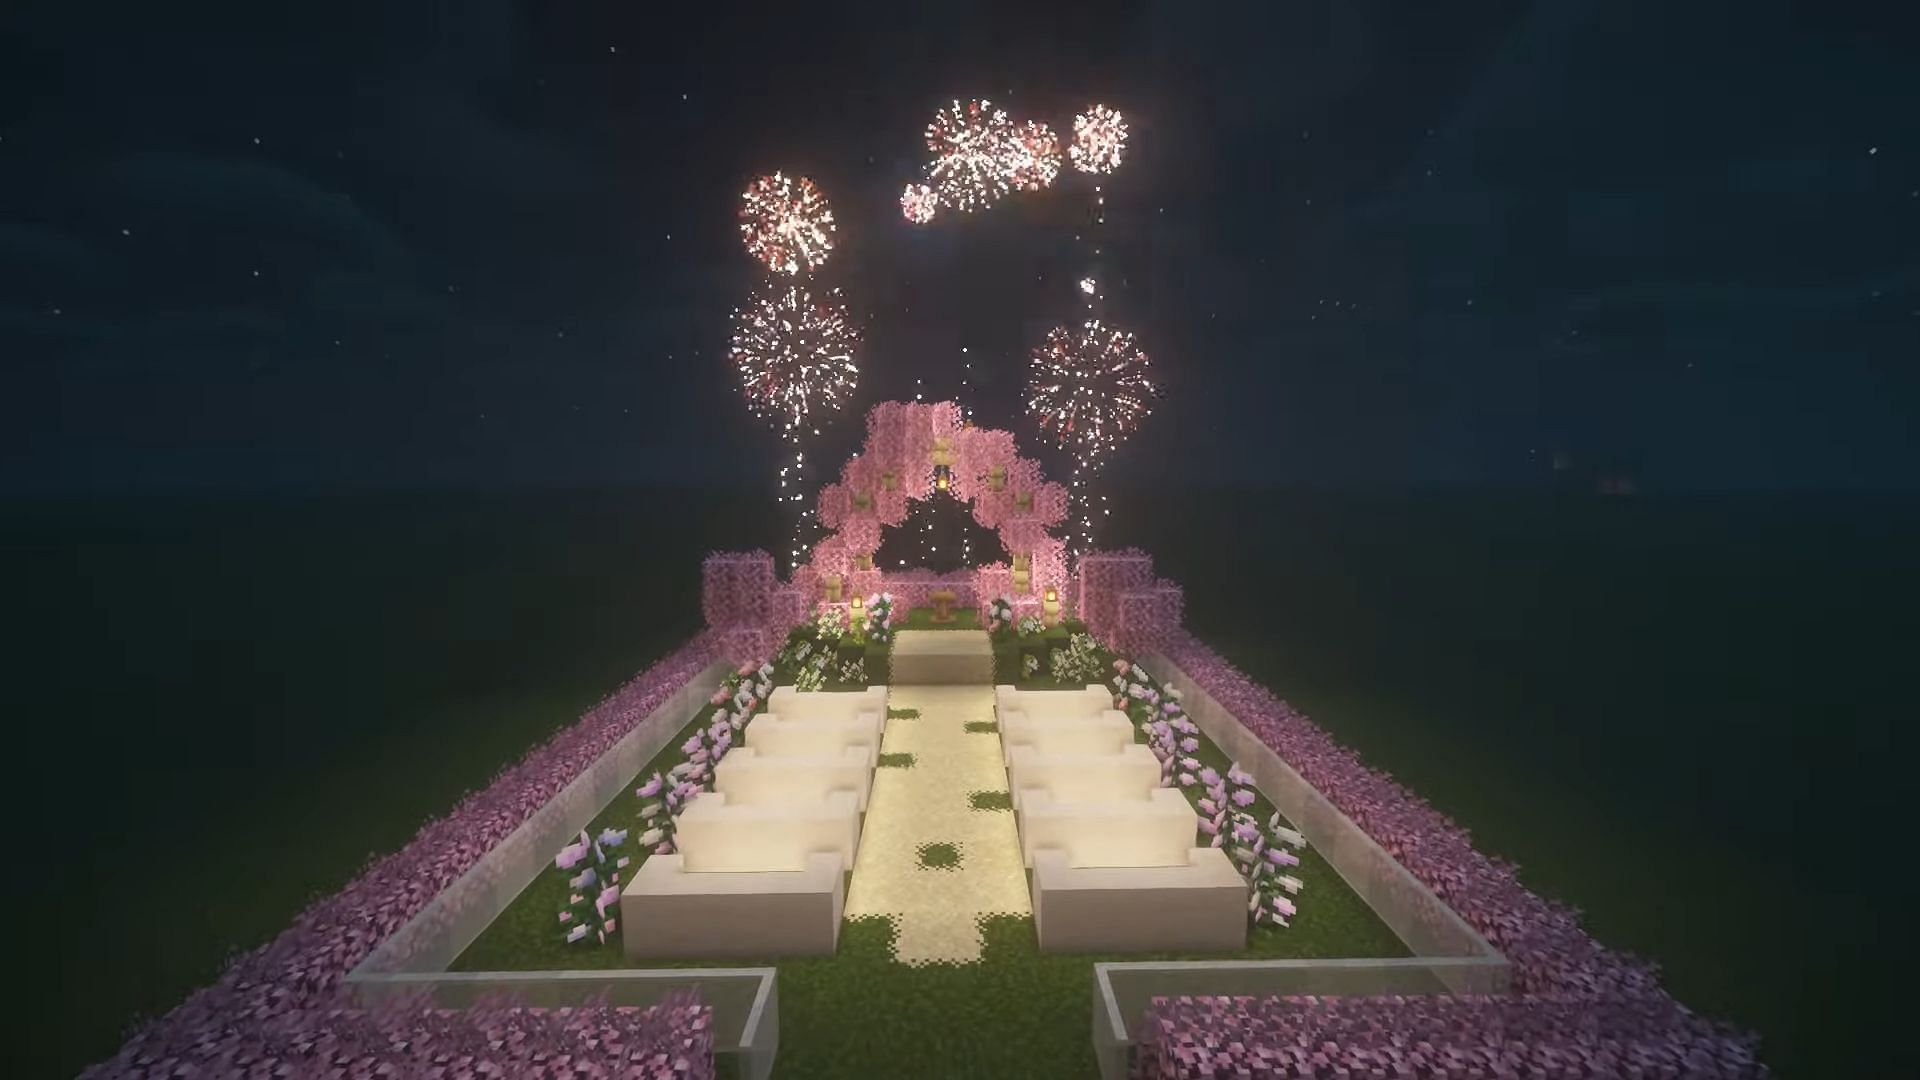 Outdoor Wedding Venue with Fireworks (Image via YouTube/Pachimarik - Minecraft)